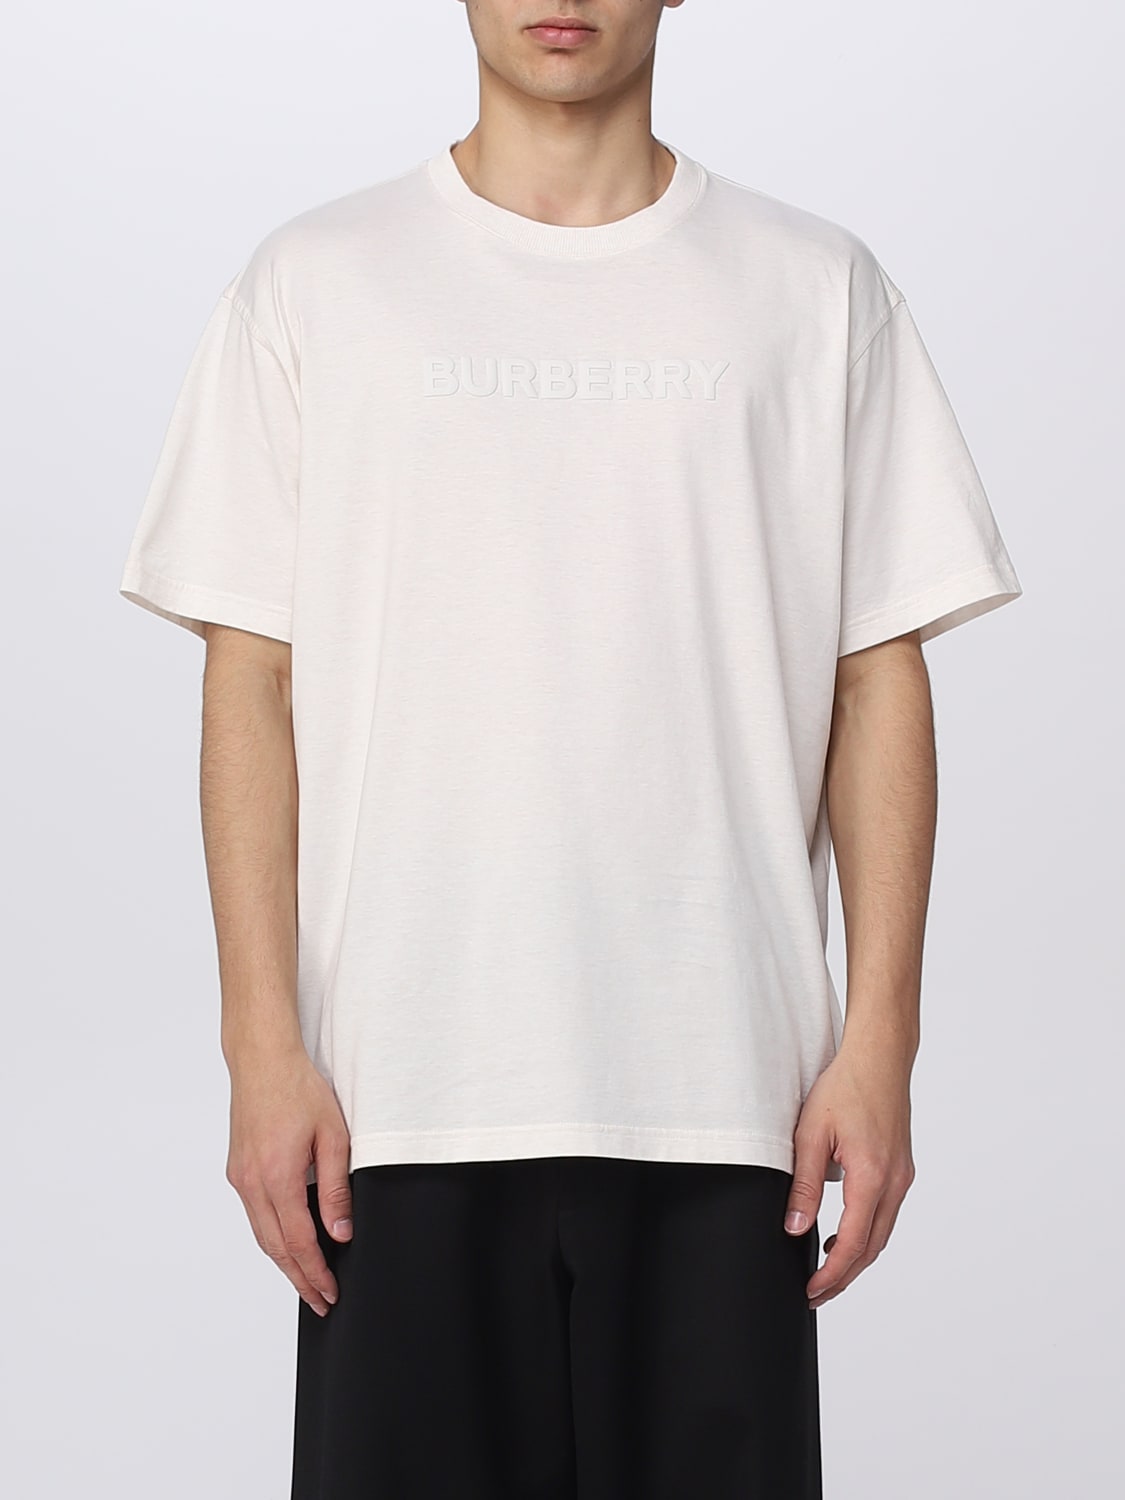 BURBERRY: cotton t-shirt - Grey | Burberry t-shirt 8068709 online